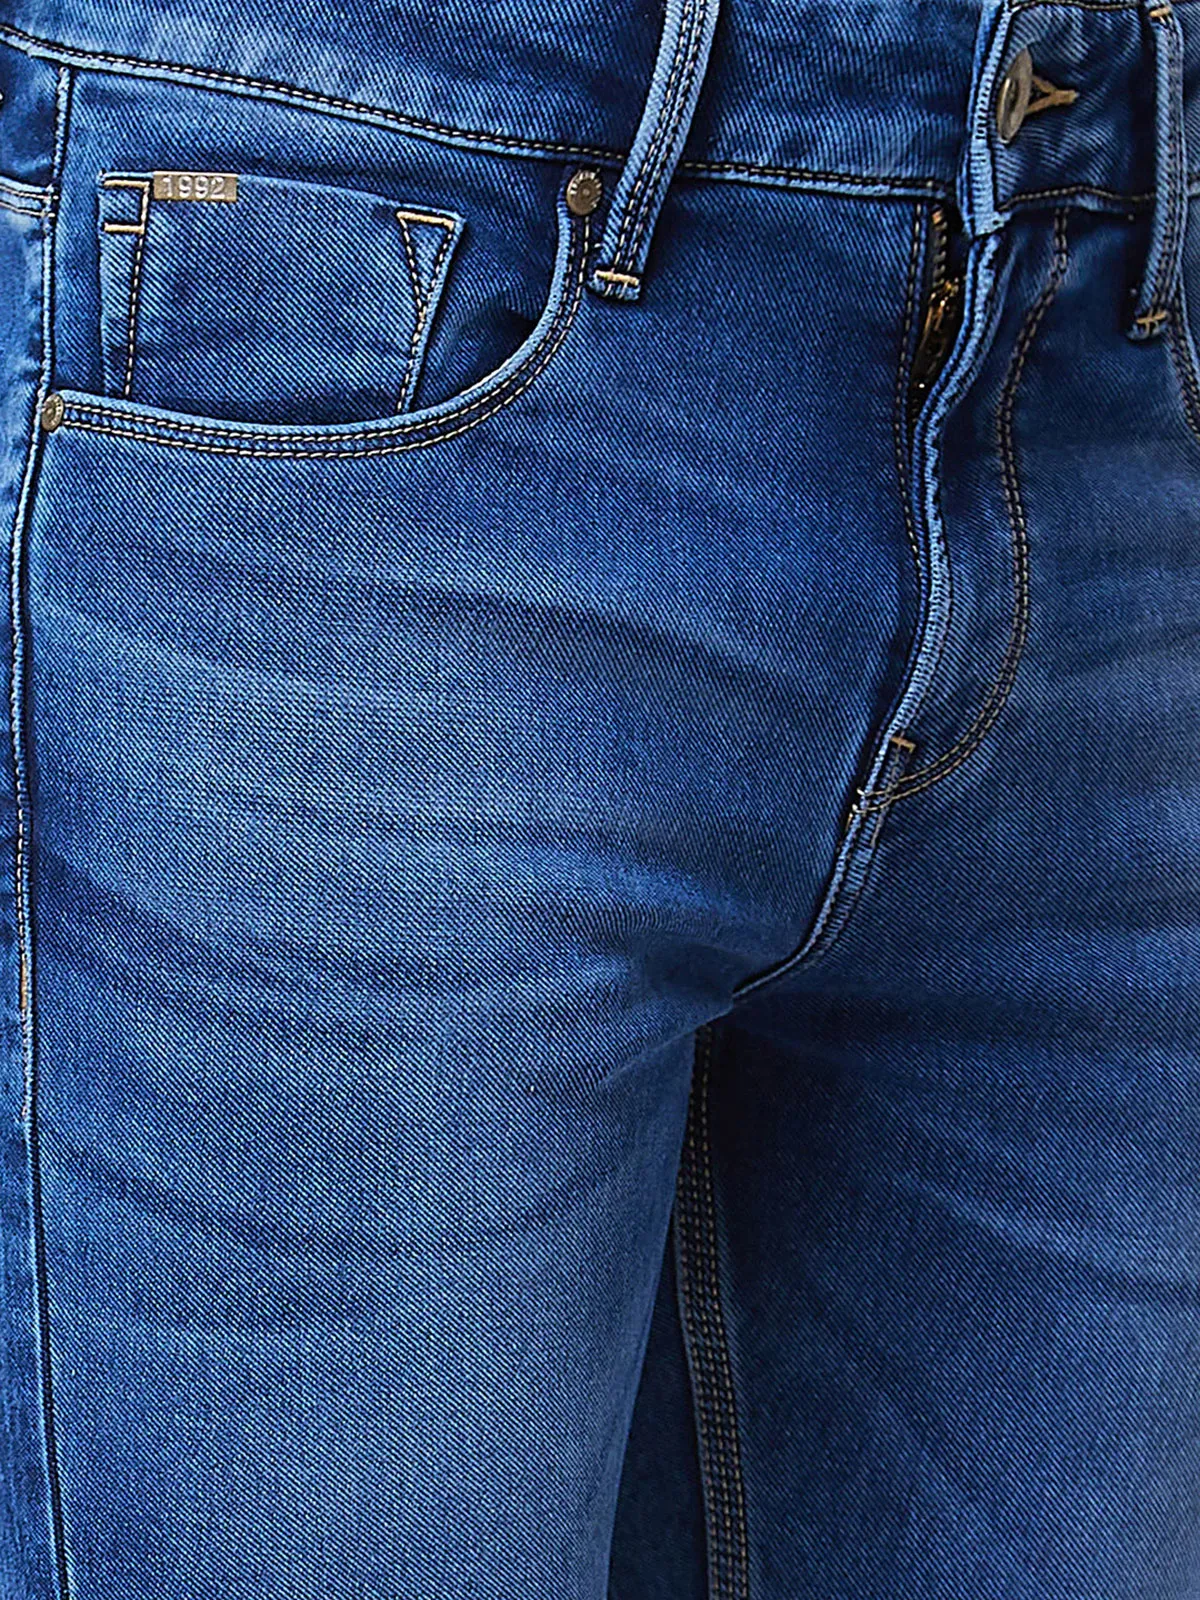 SPYKAR washed blue jeans